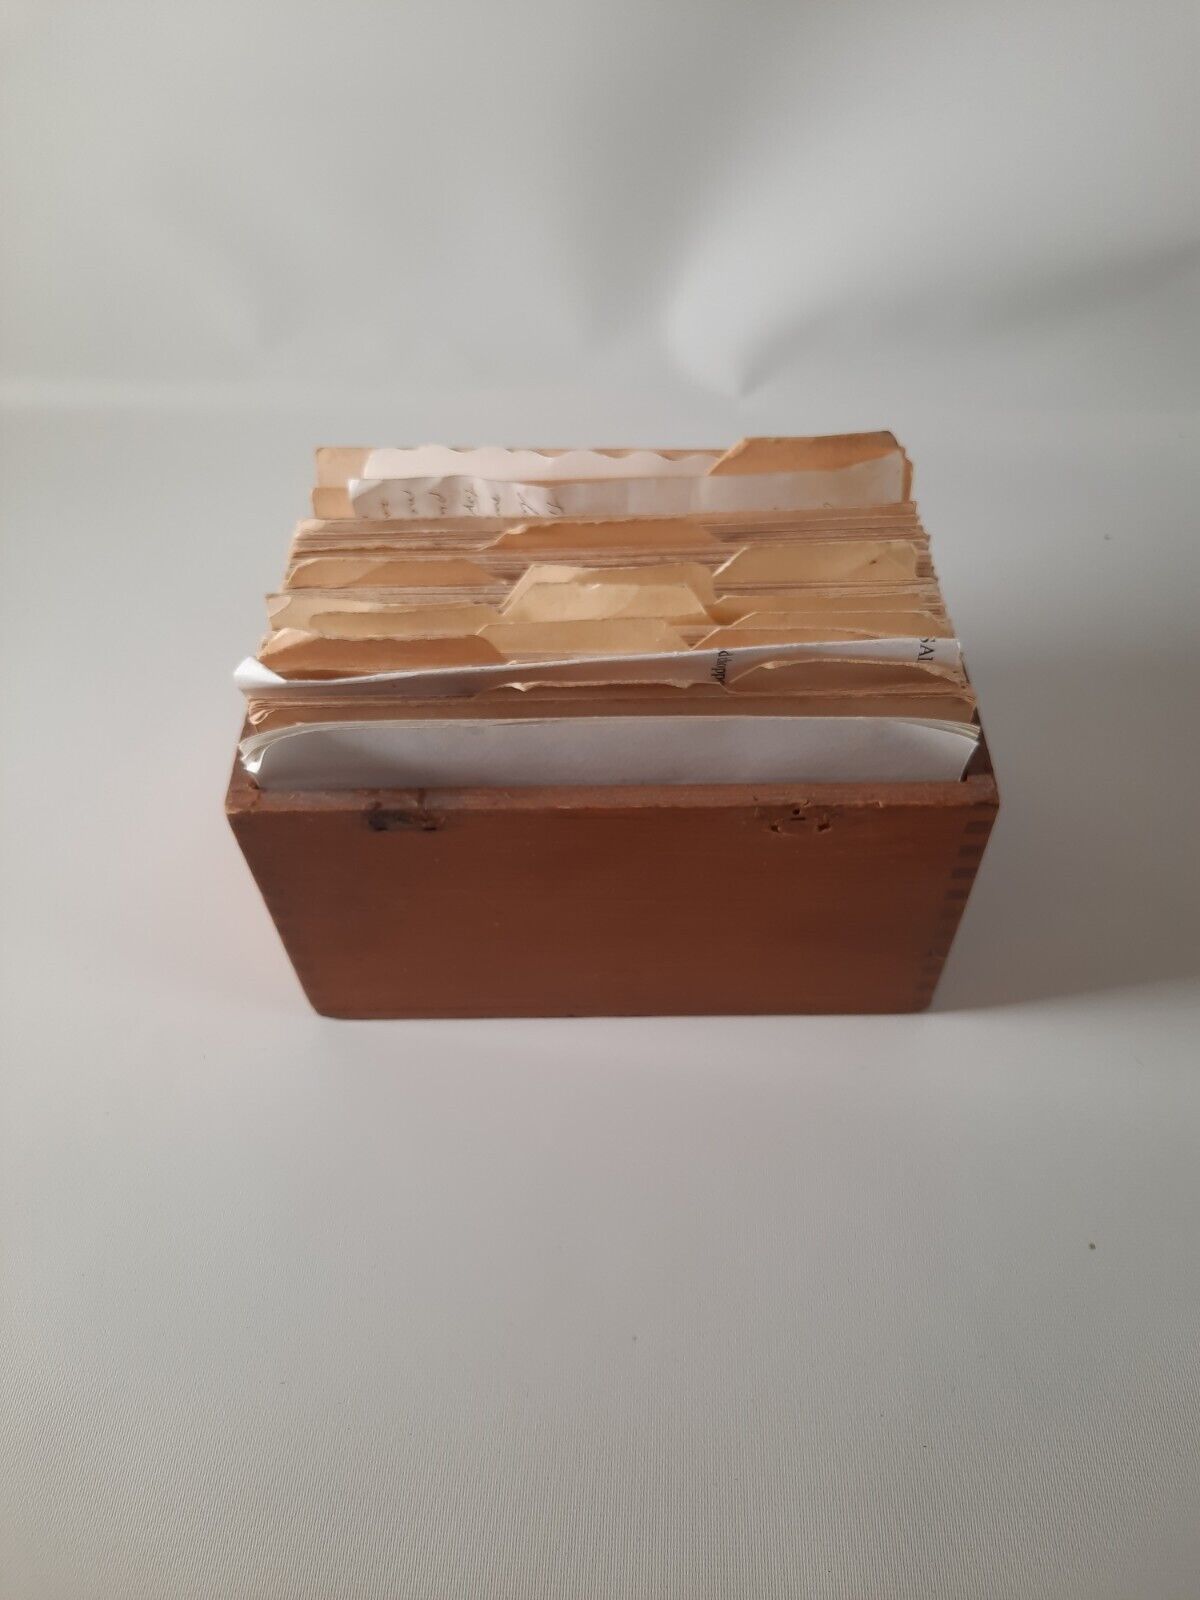 Vintage Retro Wooden Recipe Box With Recipes No Cover 